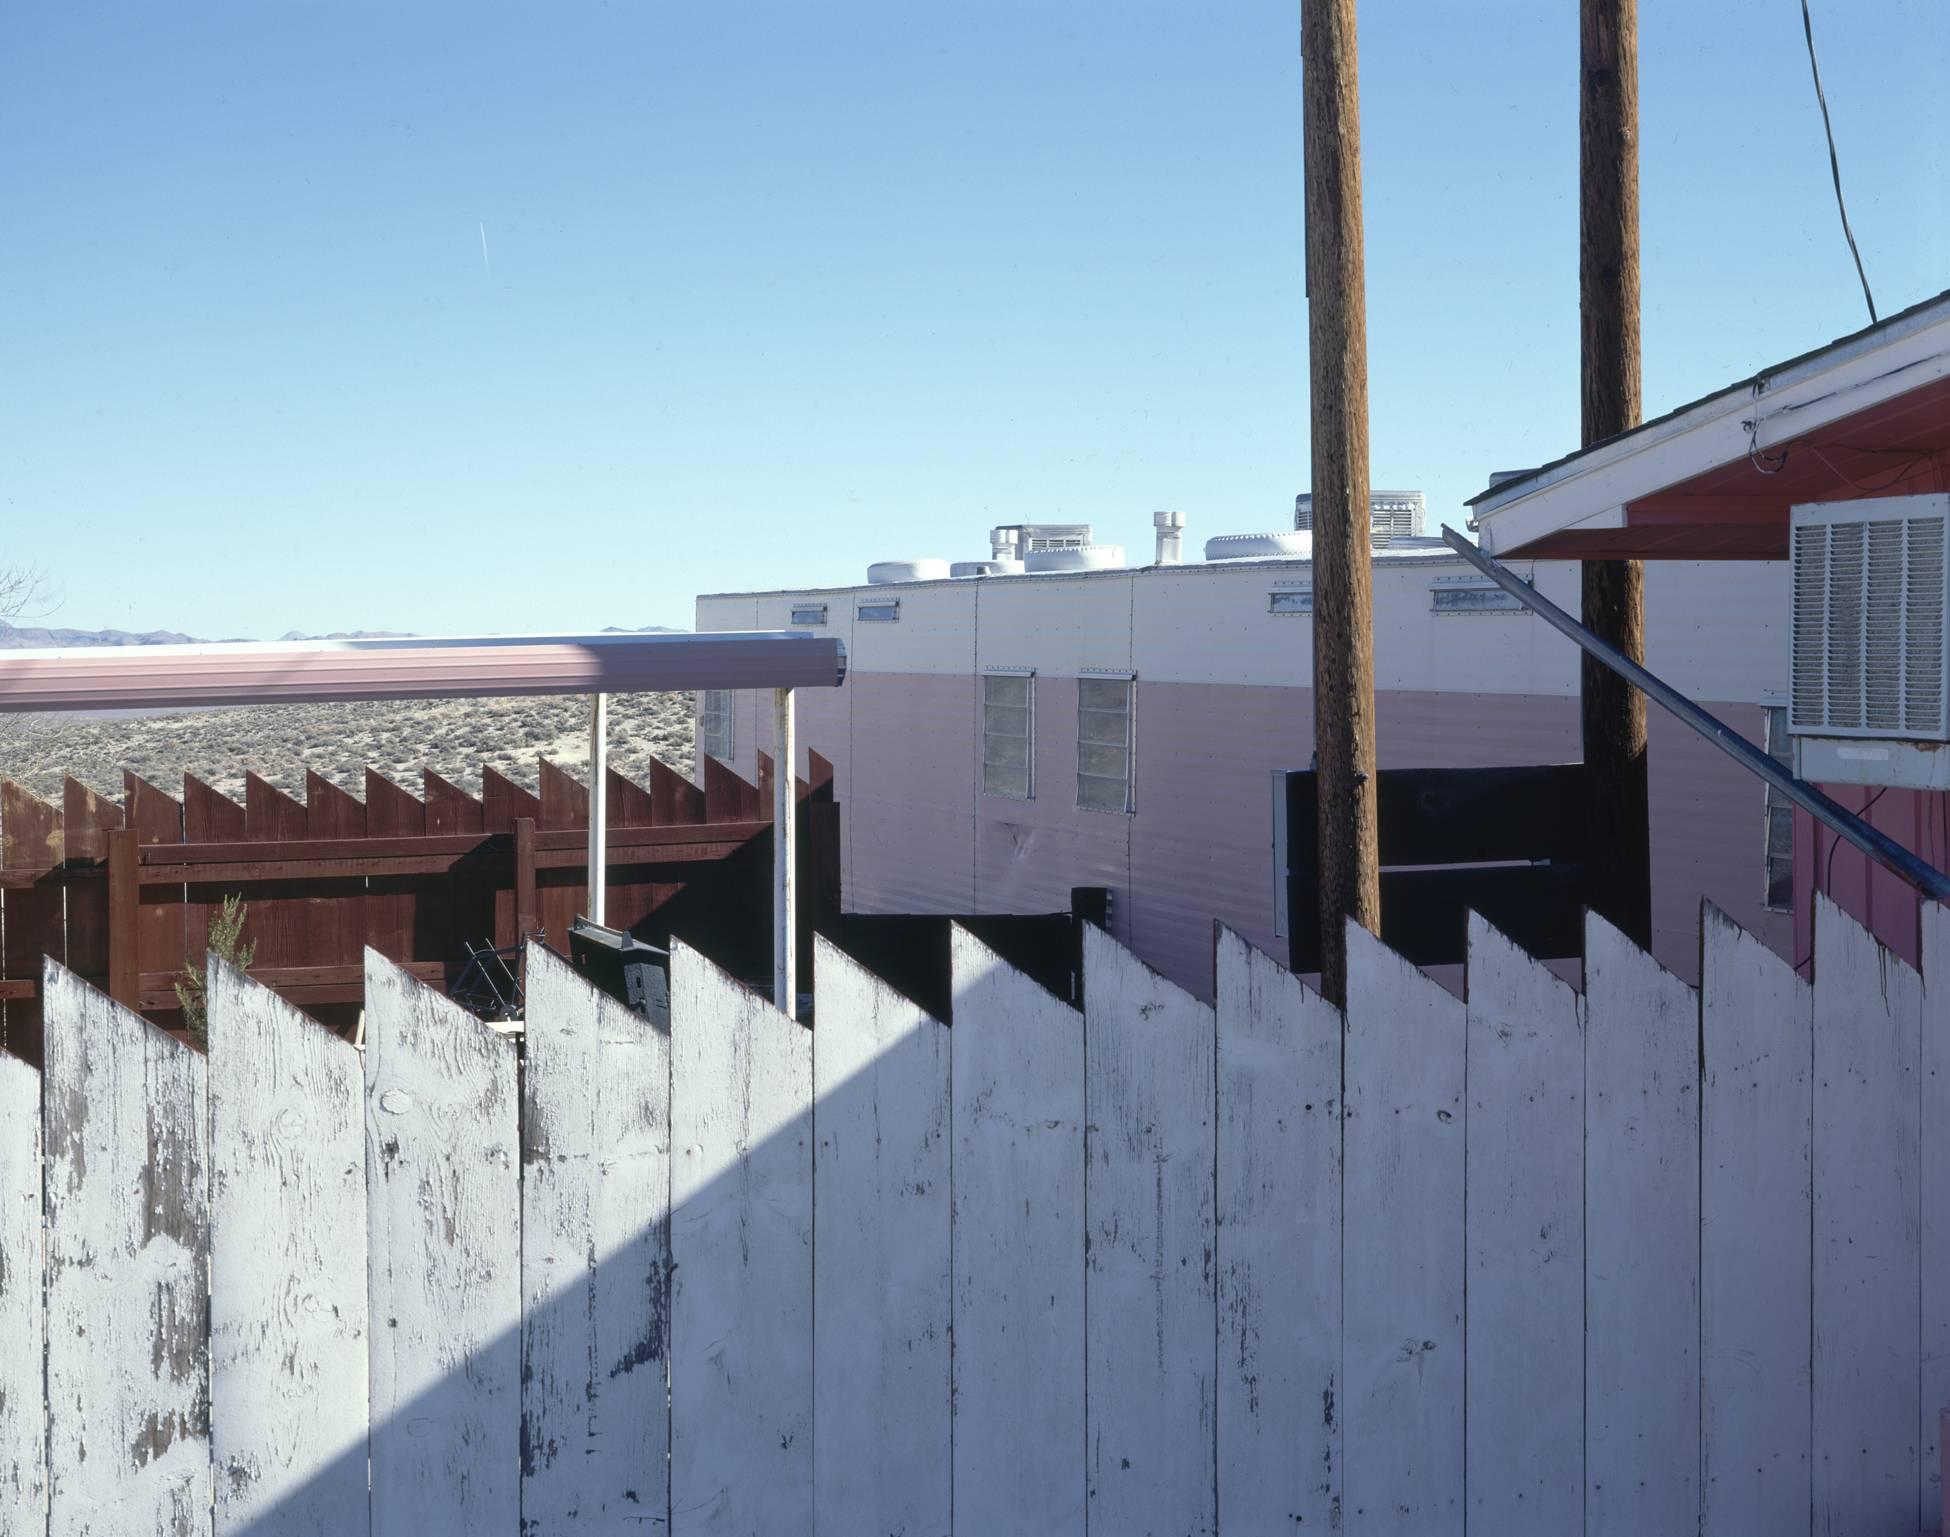 Timothy Hursley Landscape Print - Bobbie's Buckeye Bar, Nevada, limited ed. Dye Transfer documentary photograph